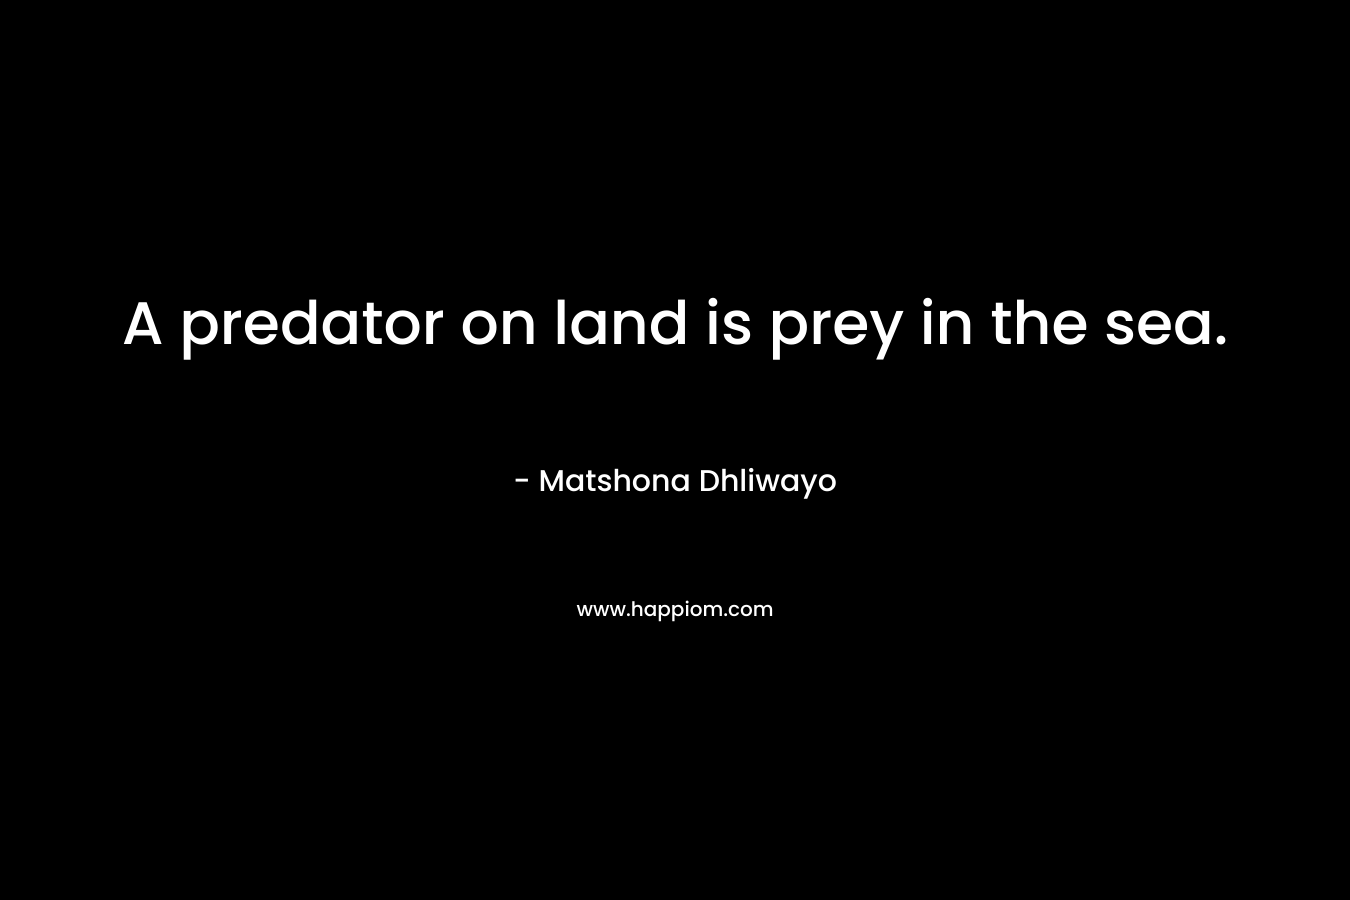 A predator on land is prey in the sea. – Matshona Dhliwayo